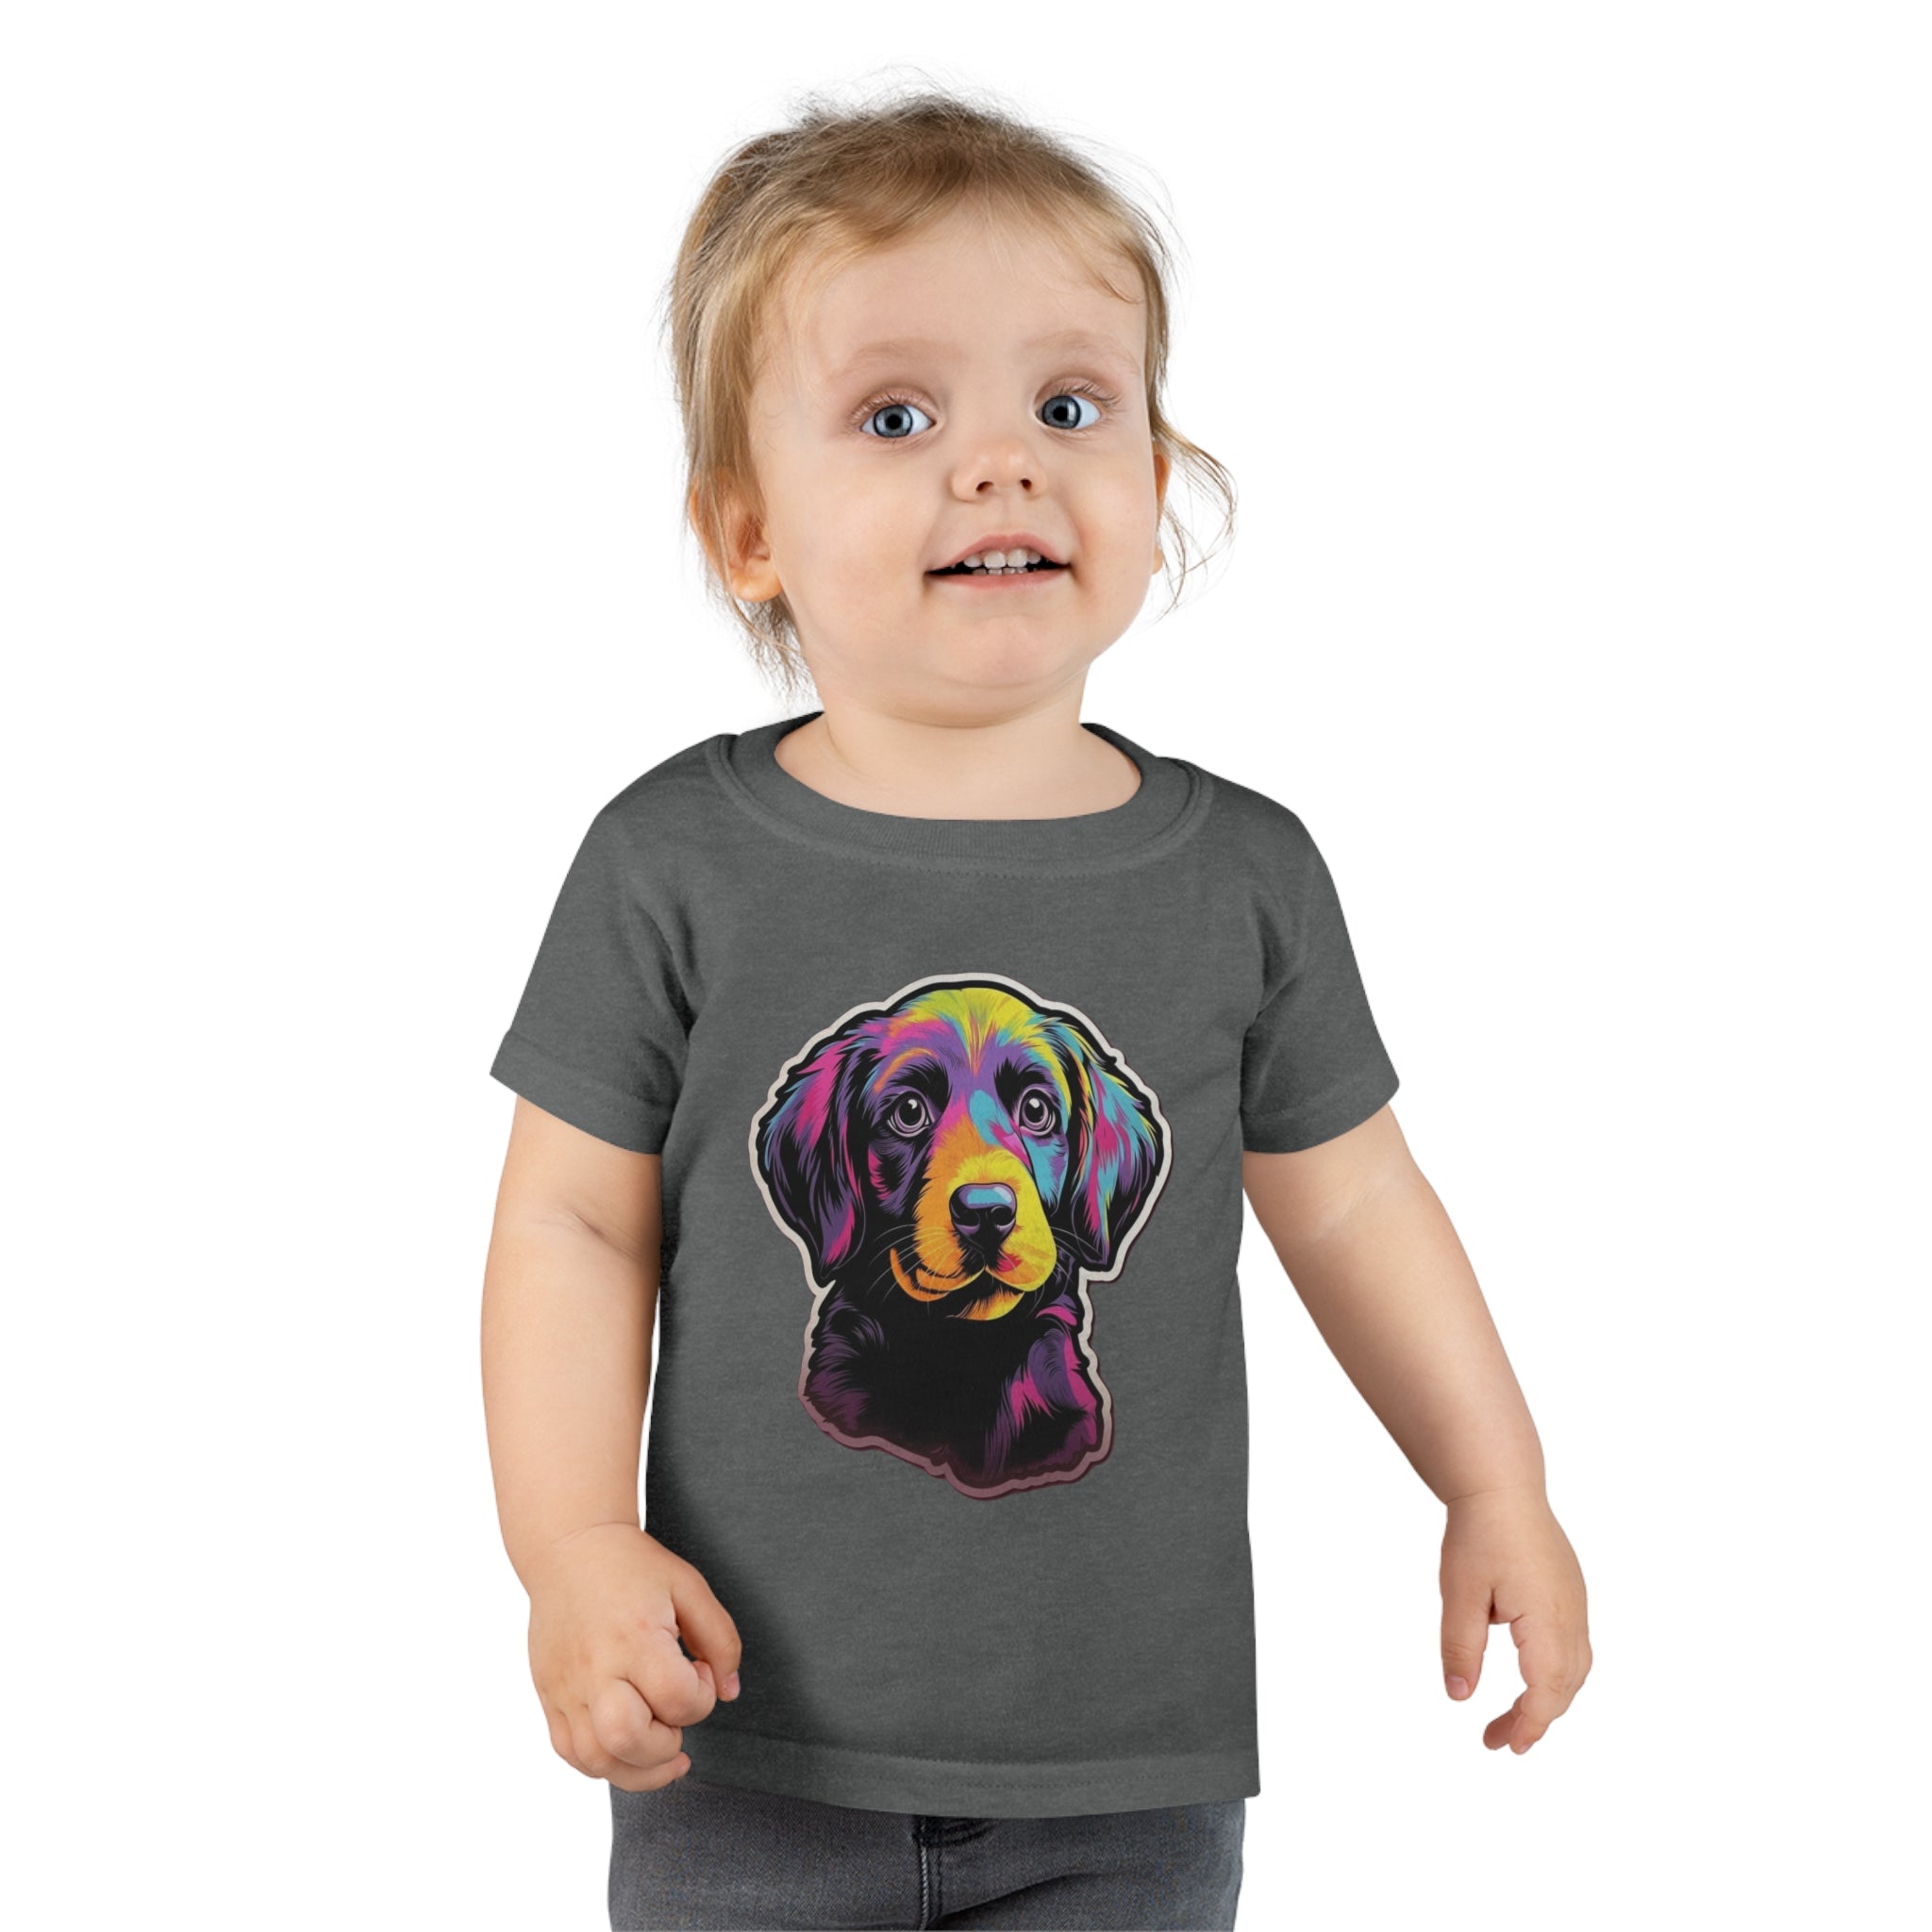 Toddler T-shirt - Puppies 03